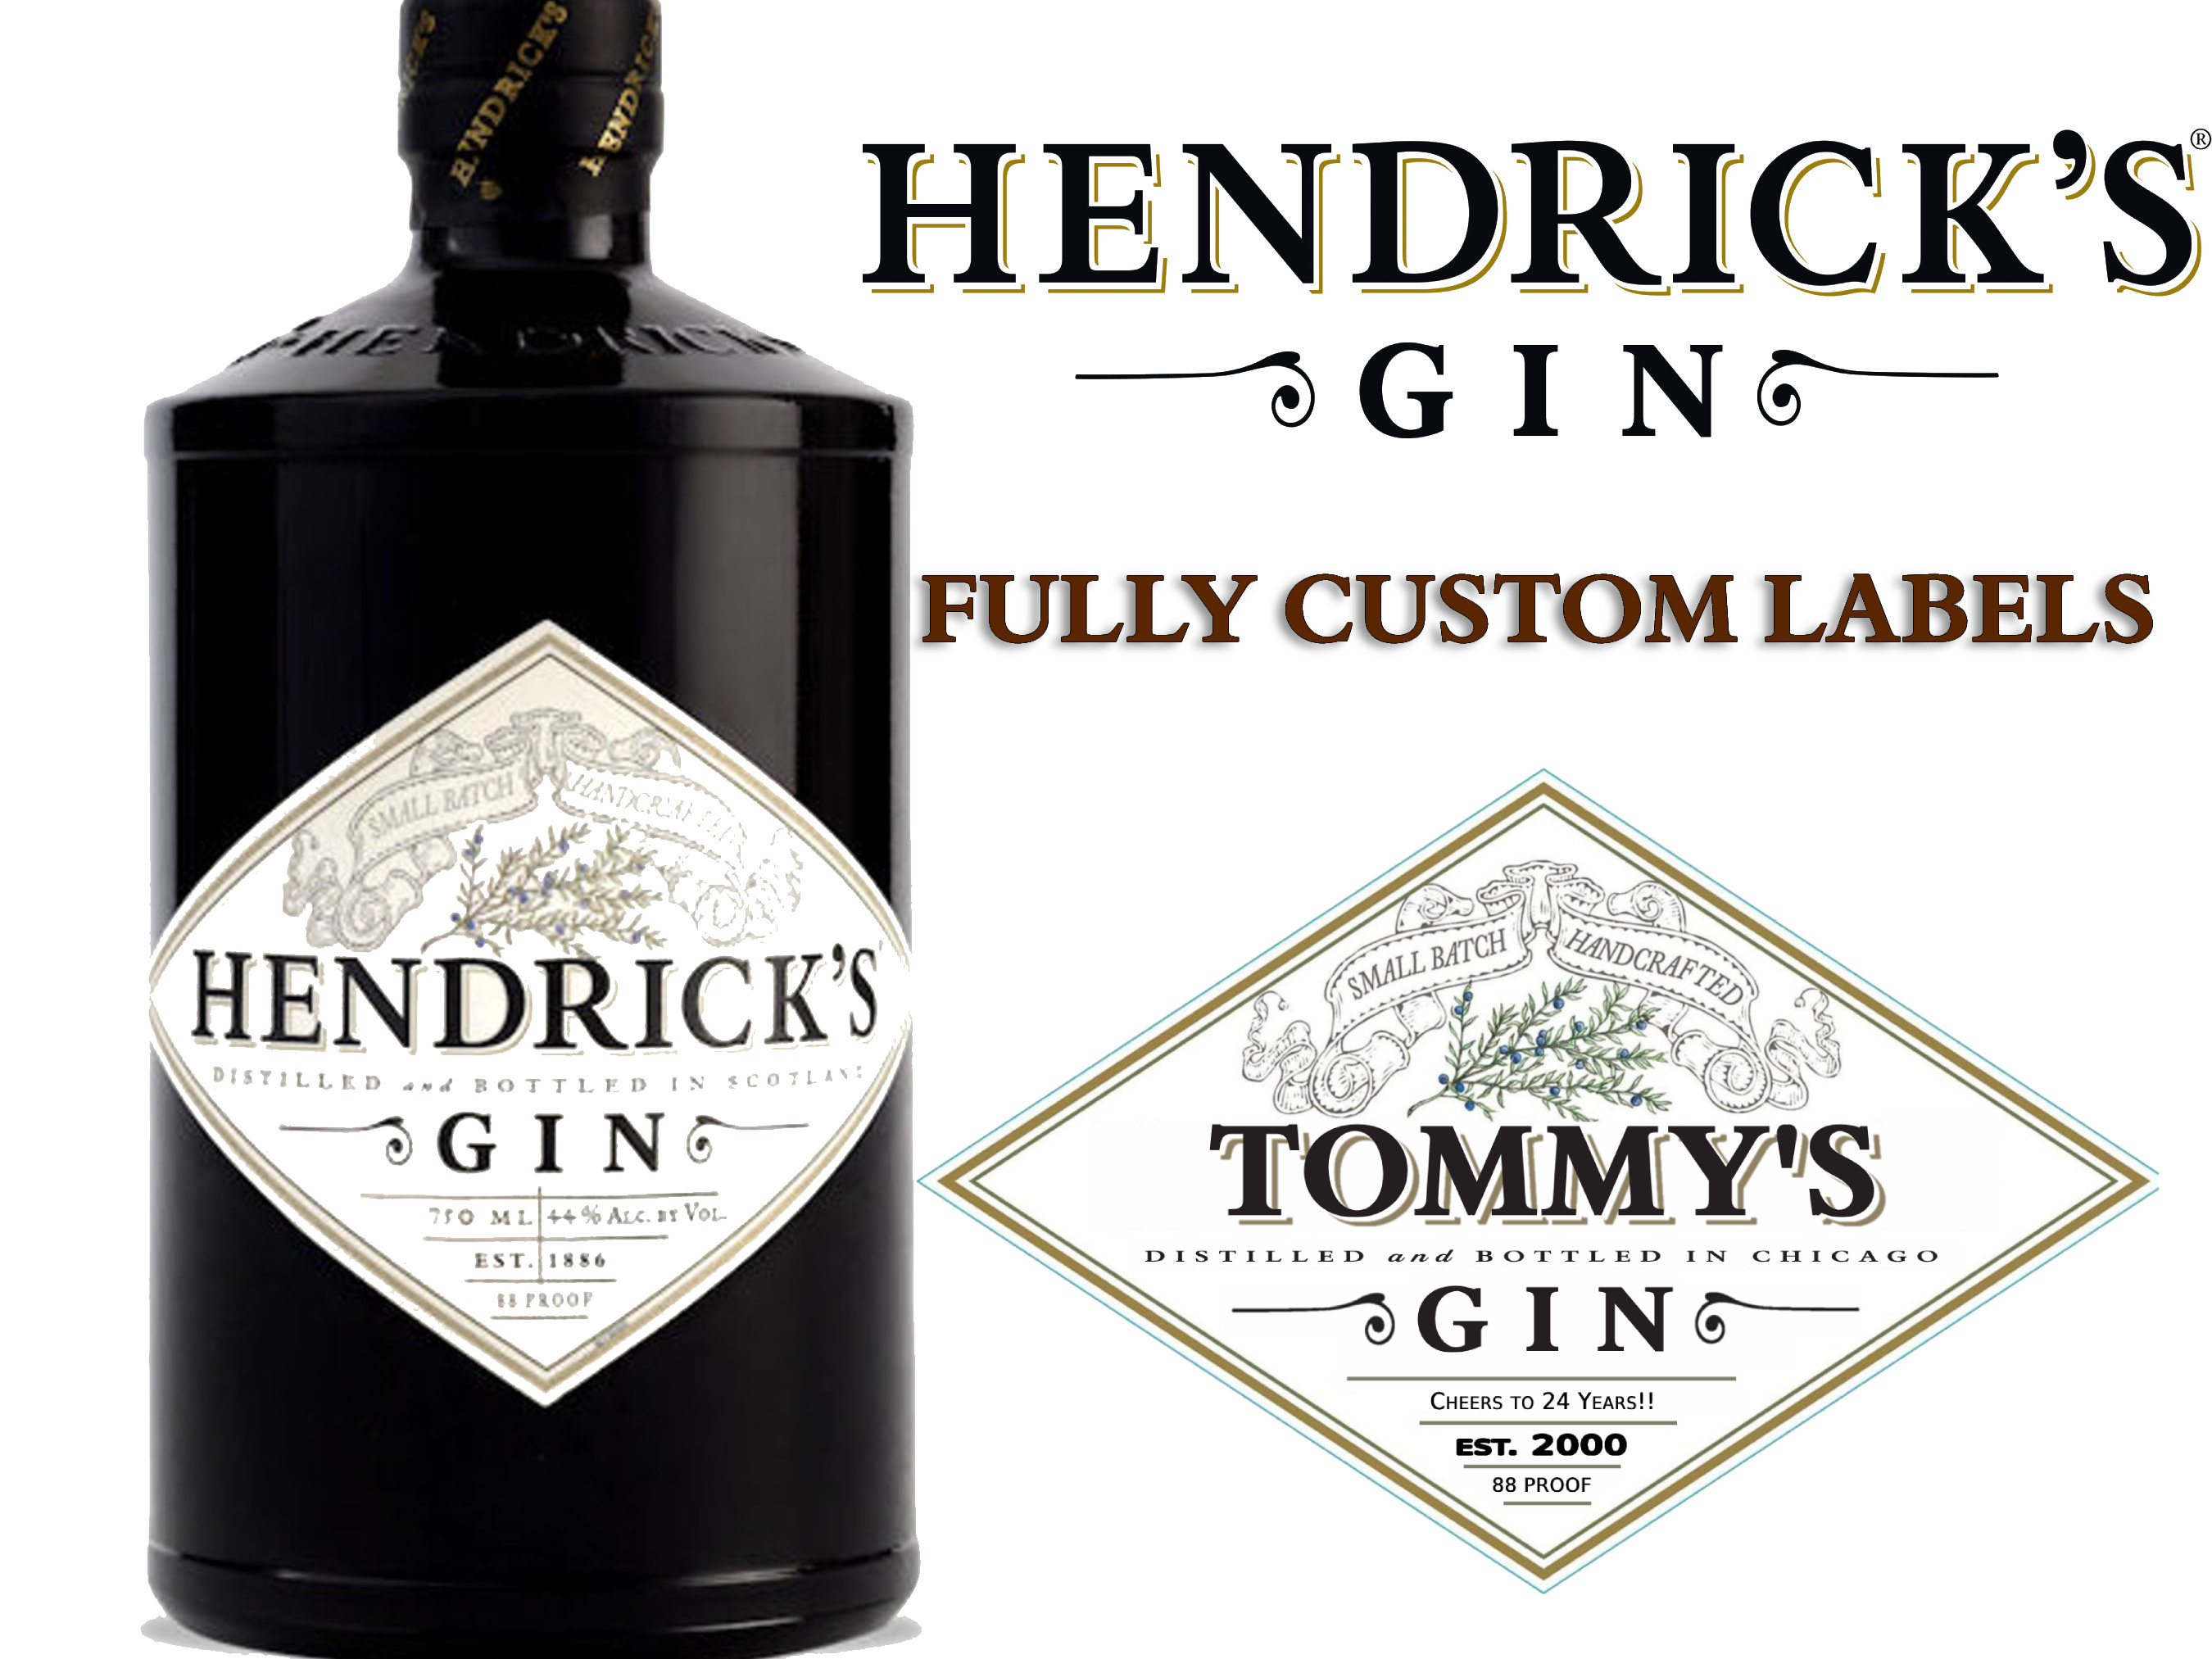 Hendrick's Scotch Gin 700ml – 1855 The Bottle Shop